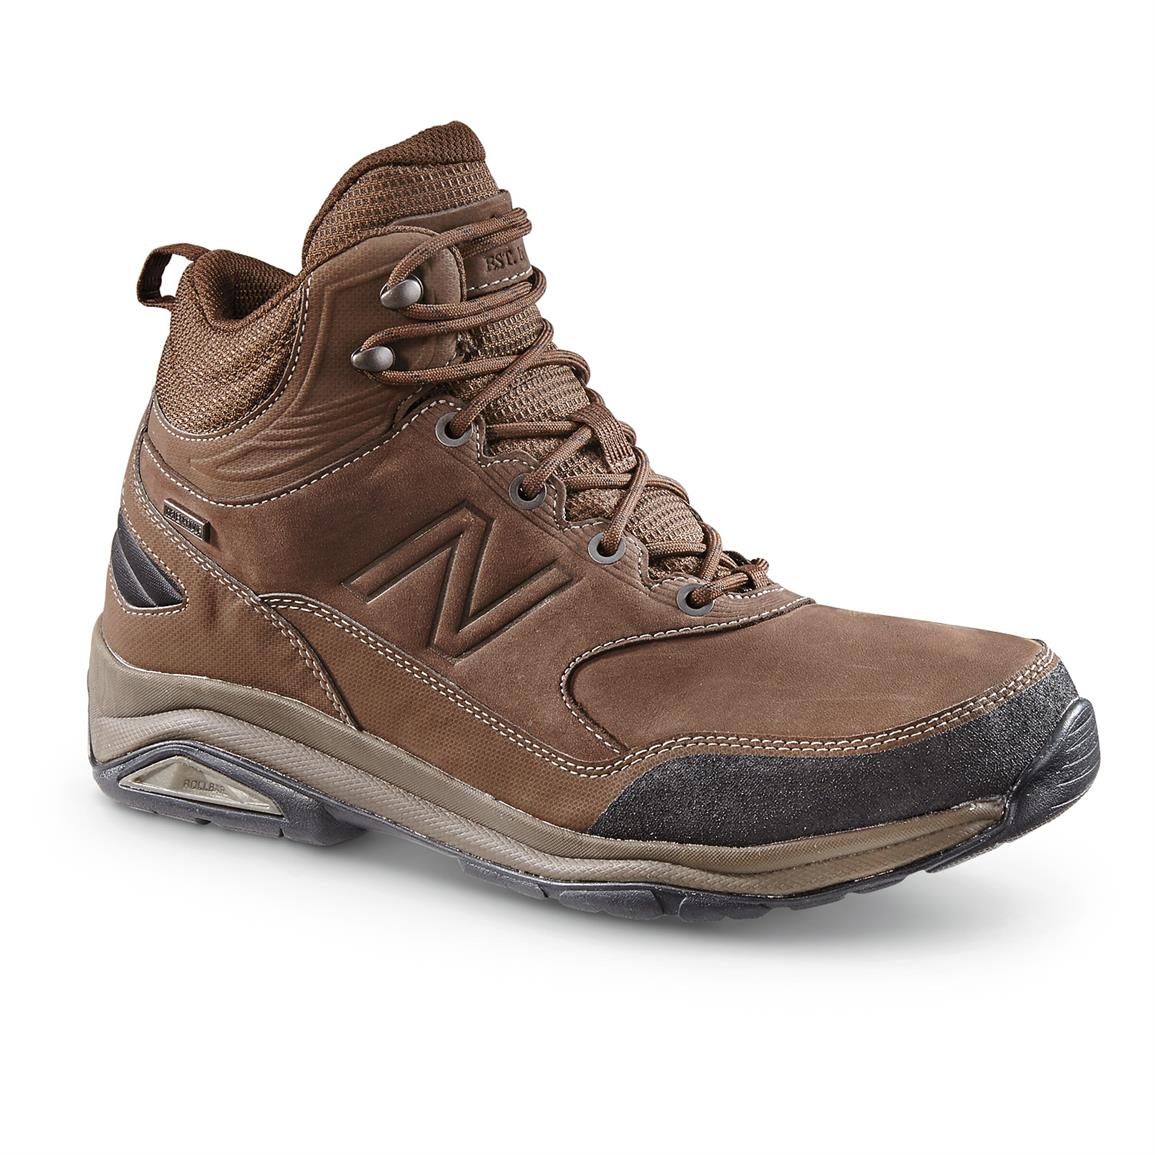 New Balance Men's 1400v1 Hiking Boots, Waterproof - 649026, Hiking ...